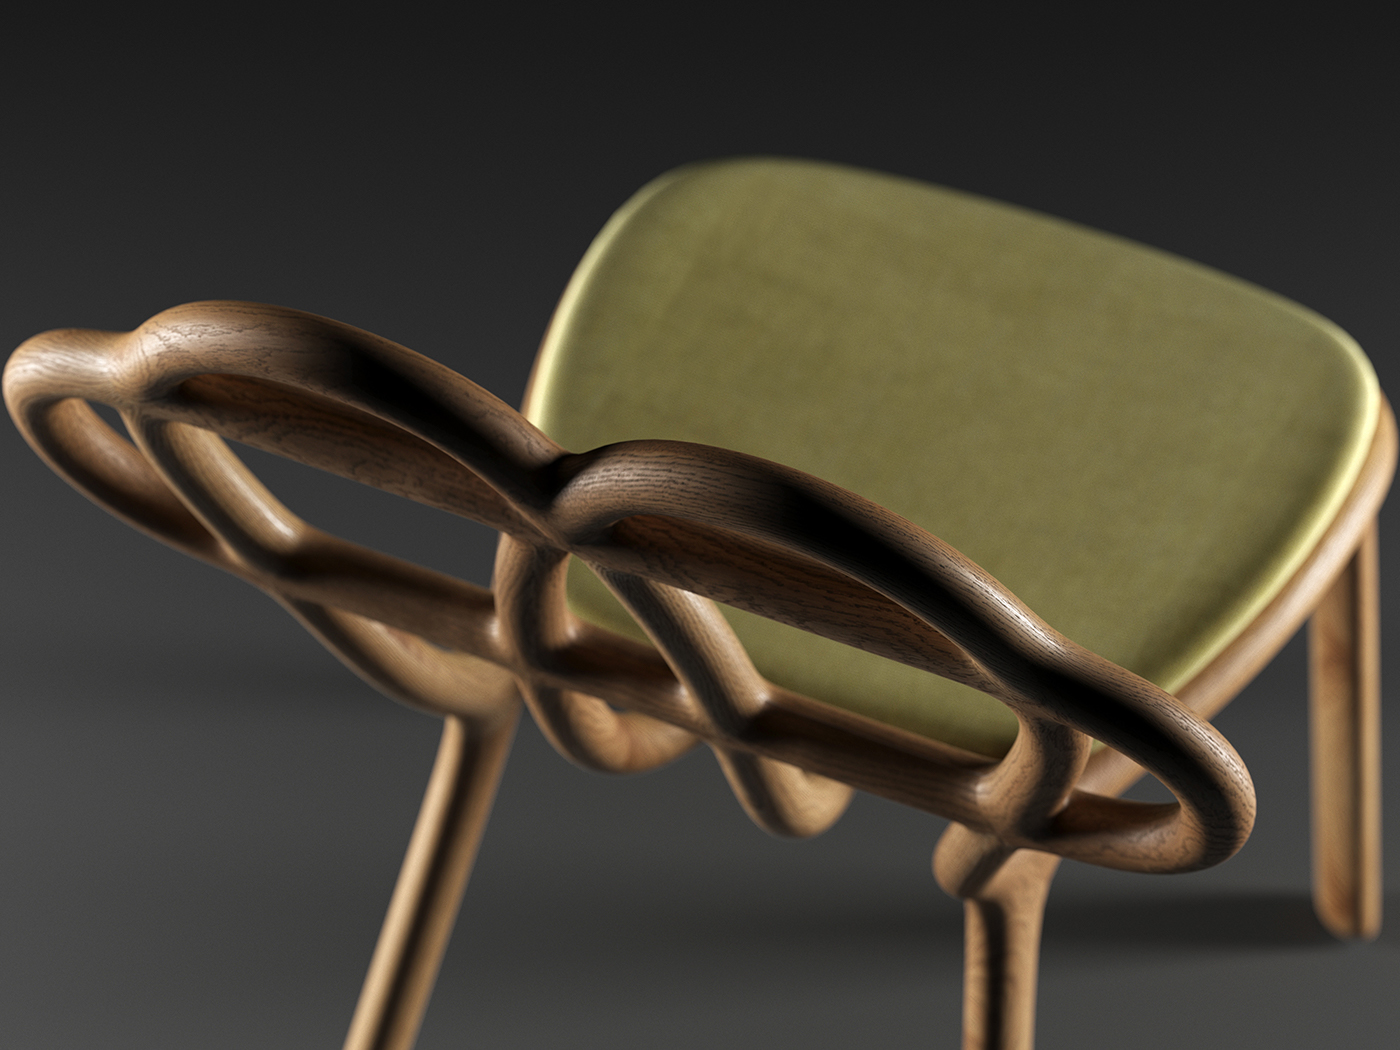 chair design decor monkey tsarukahmadova wood concept wilds jungle animal